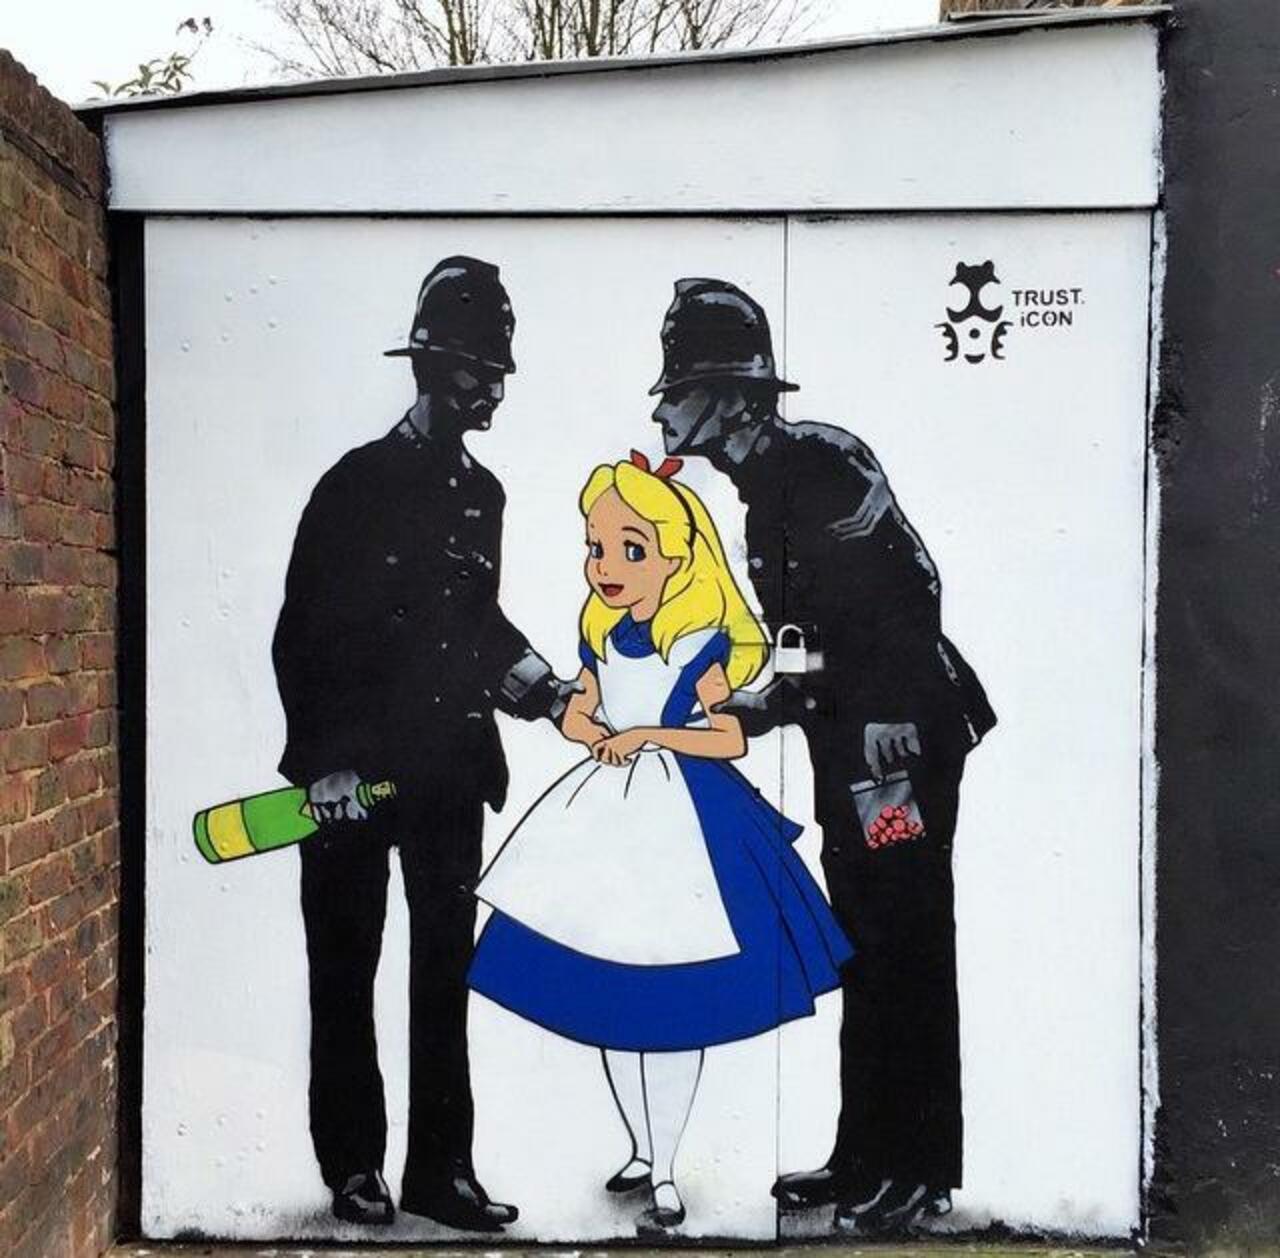 New Street Art by iCON in Camden, London 

#art #arte #graffiti #streetart http://t.co/TQXVqpI4Cj